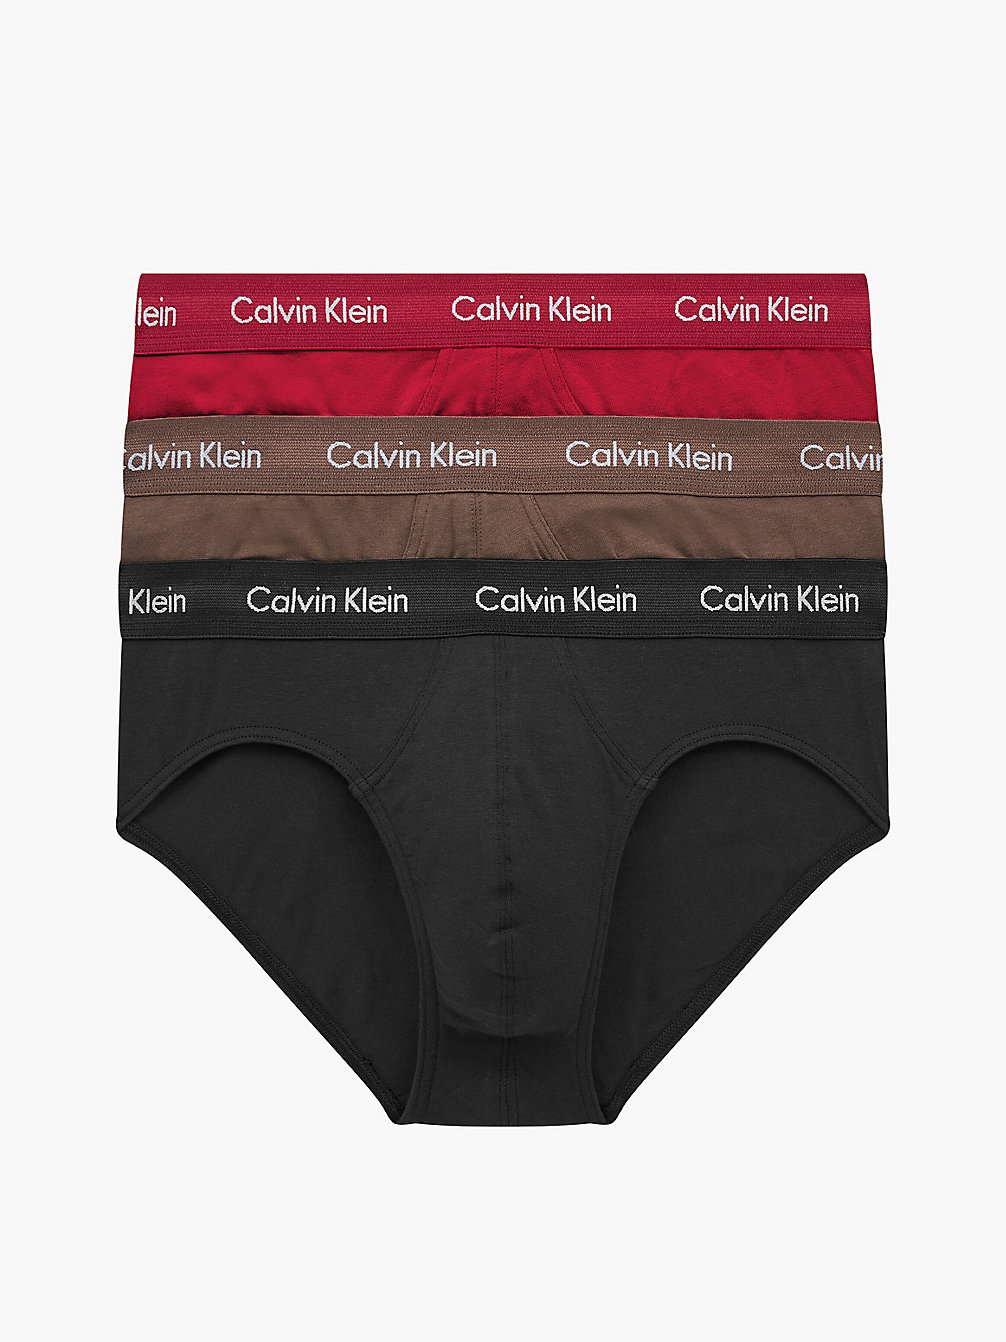 BRIGHT CAMEL/ BLACK/ RED CARPET > Zestaw 3 Par Slipów - Cotton Stretch > undefined Mężczyźni - Calvin Klein